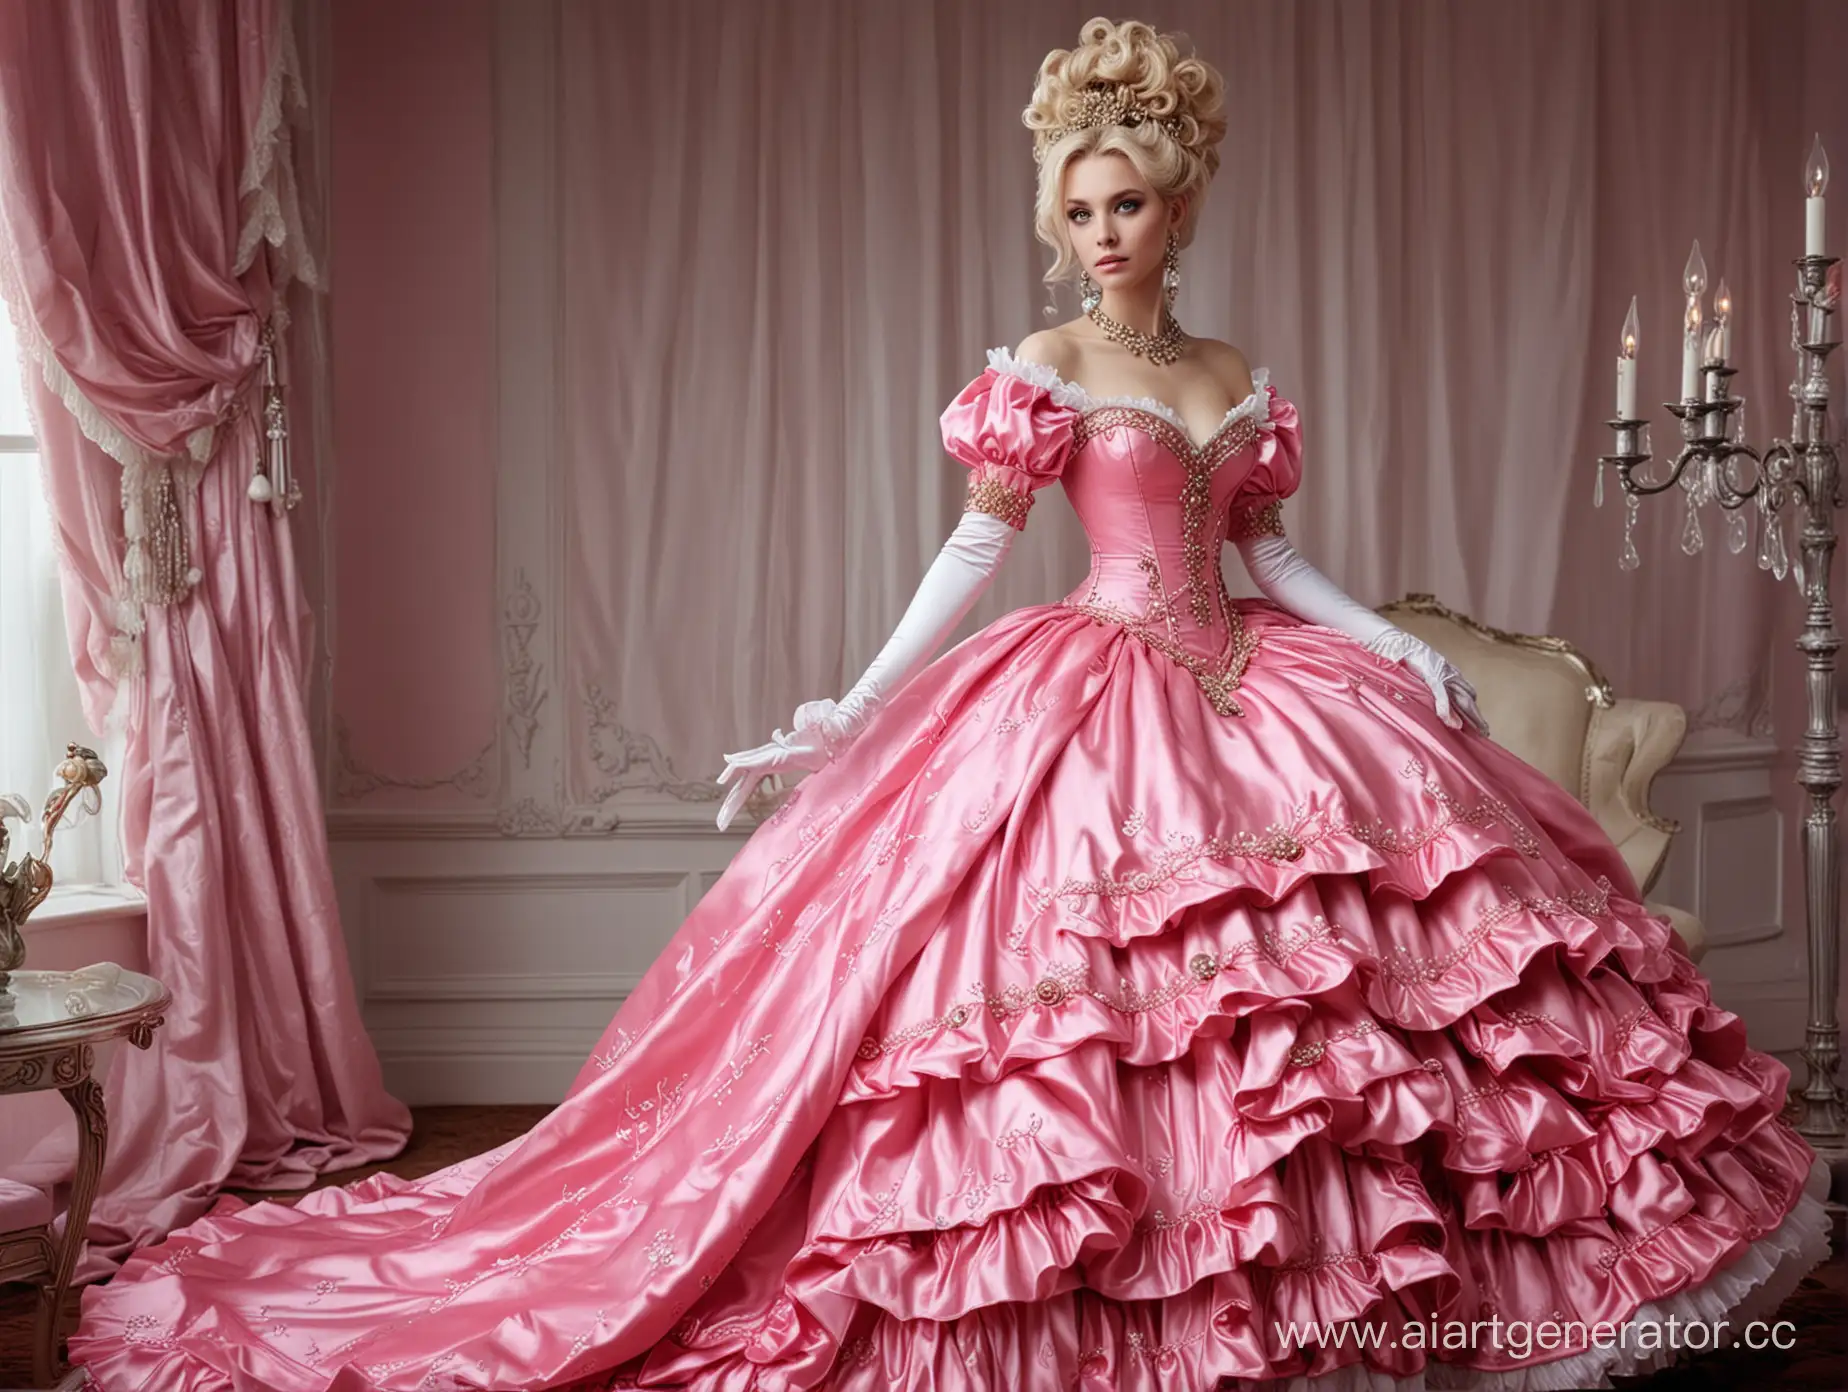 Elegant-25YearOld-GirlDemon-Tzeentch-in-Luxurious-Pink-Satin-Dress-at-Ball